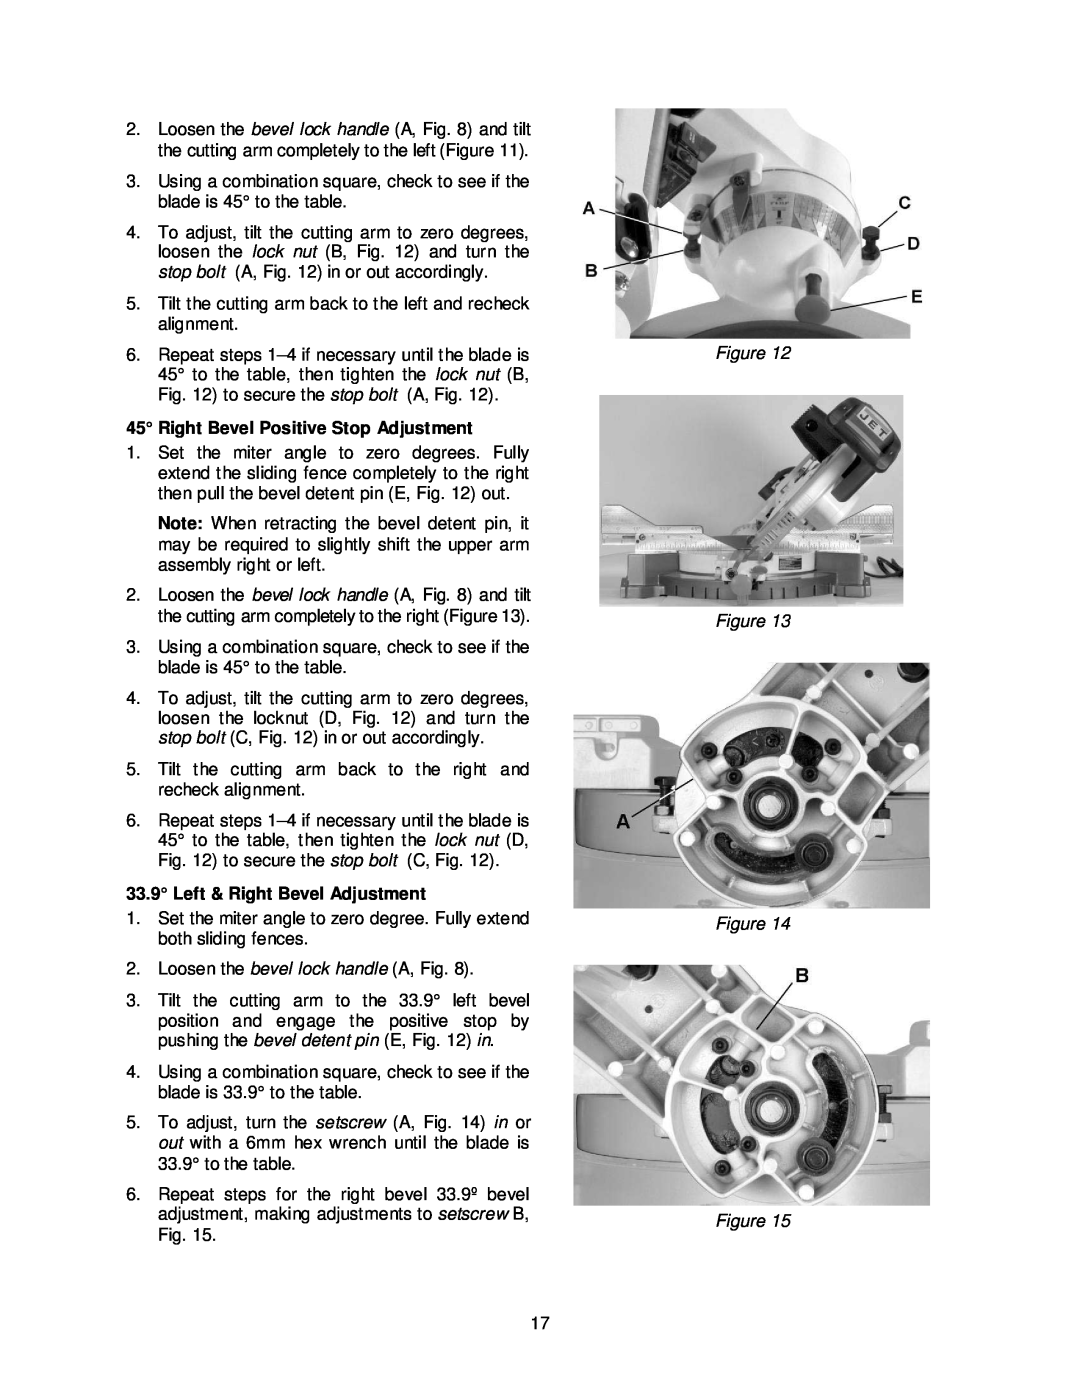 Jet Tools JMS-12SCMS manual Right Bevel Positive Stop Adjustment, Left & Right Bevel Adjustment 